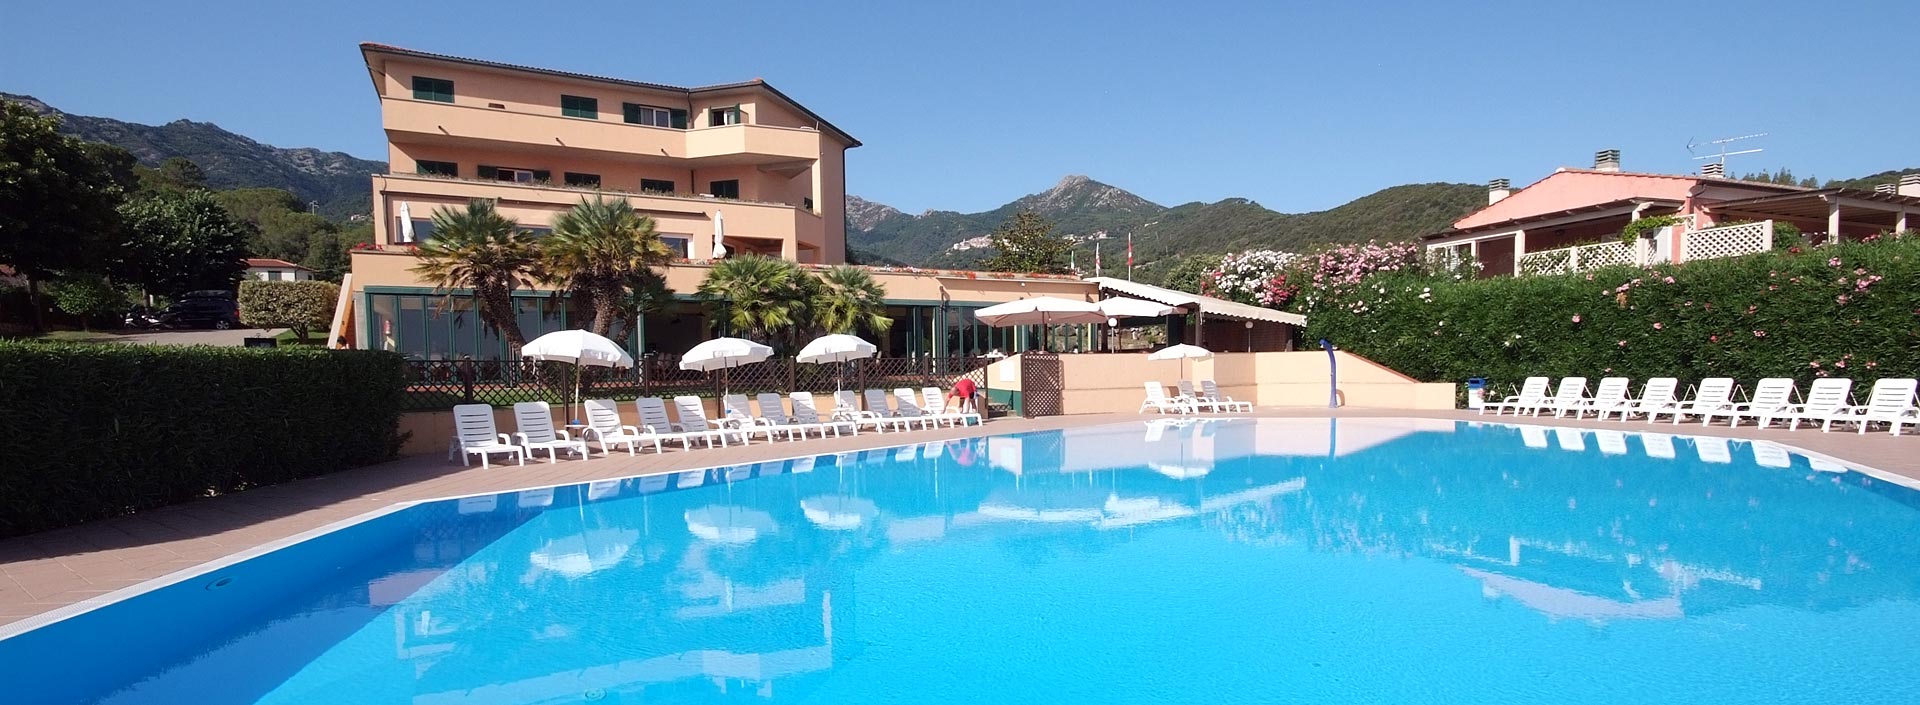 Hotel & Residence auf der Insel Elba